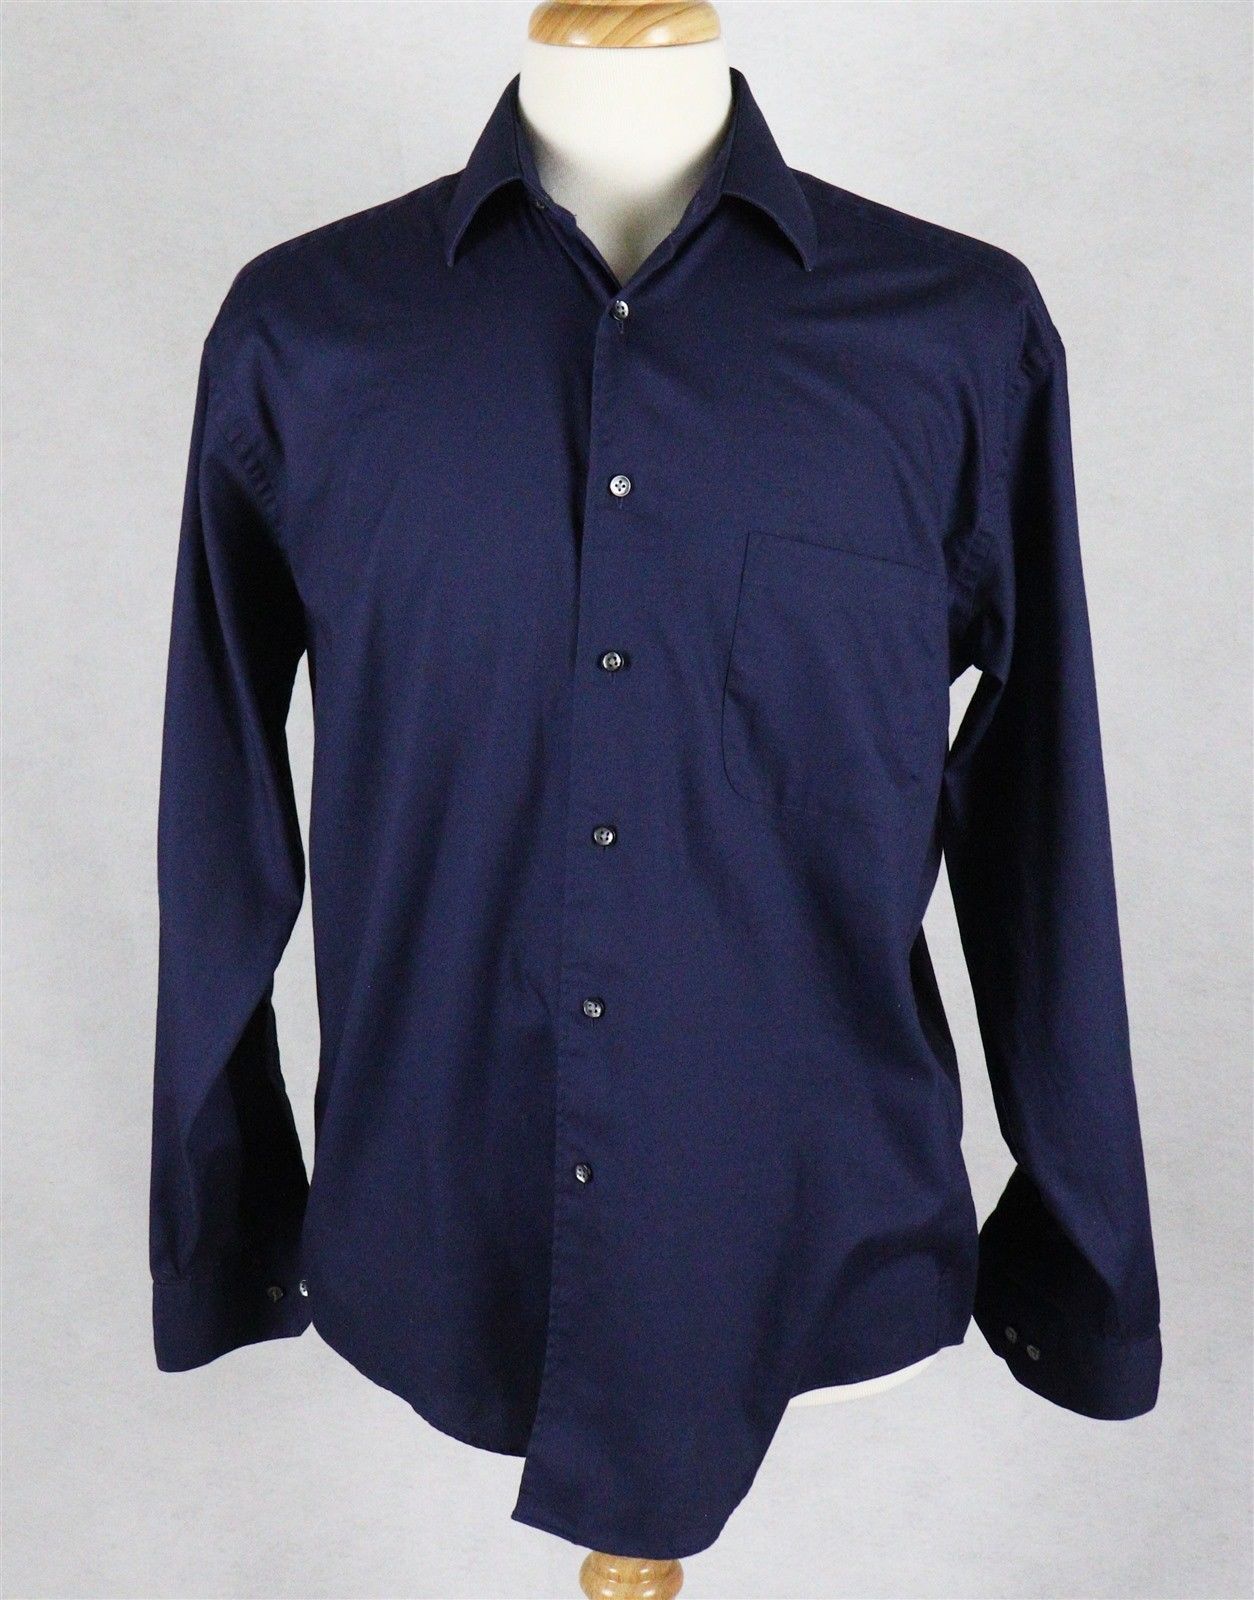 Croft & Barrow Mens Long Sleeve Blue Shirt Size 15 1/2 34/35 - Dress Shirts